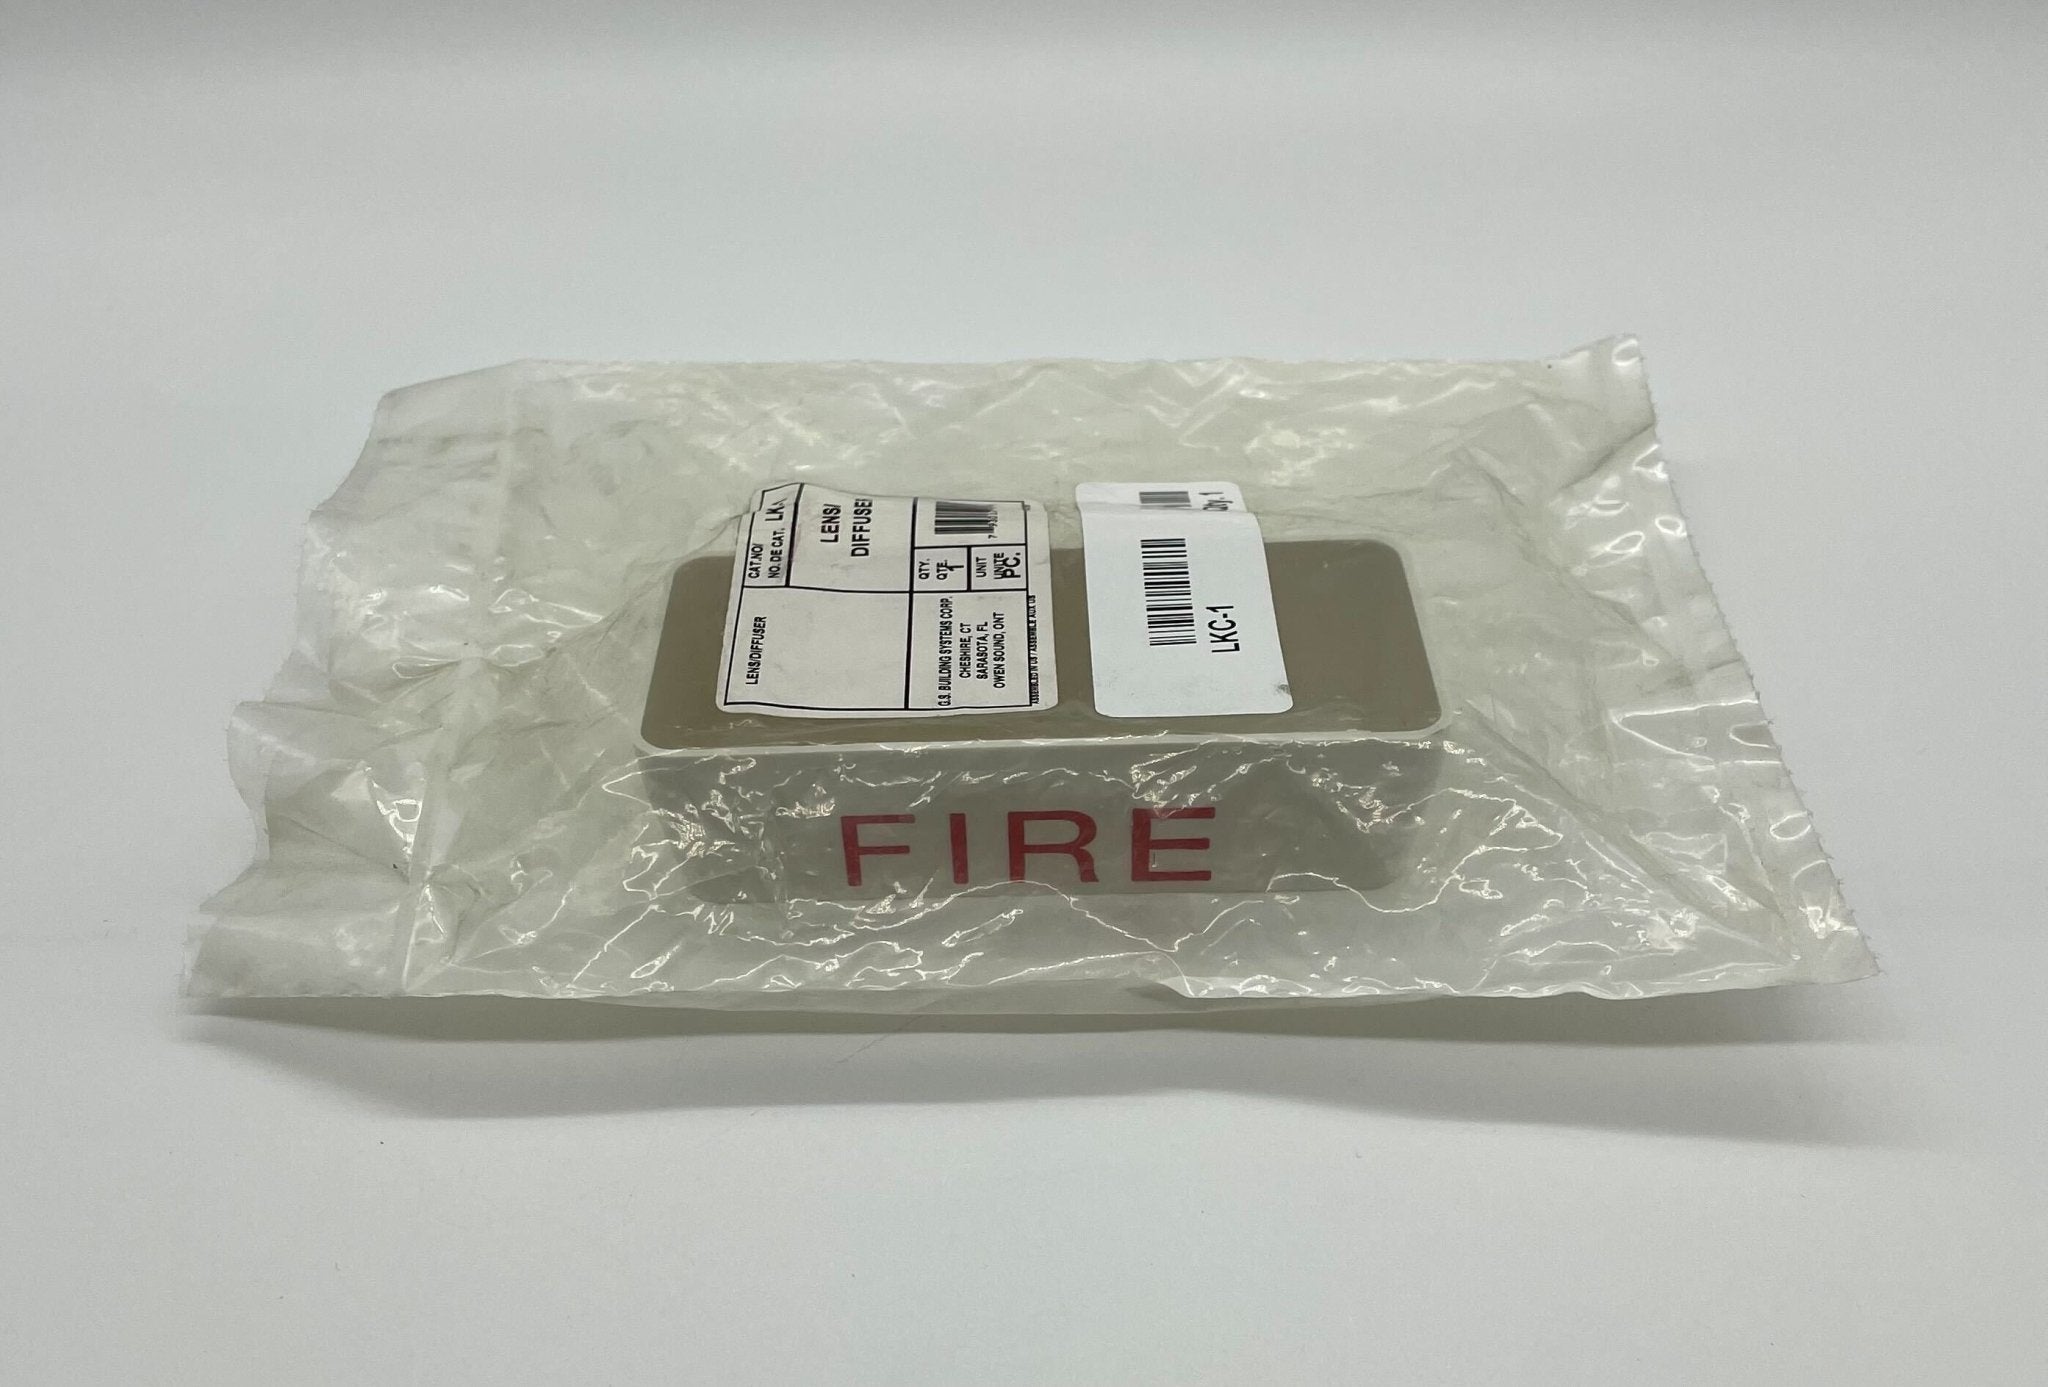 Edwards LKC-1 - The Fire Alarm Supplier